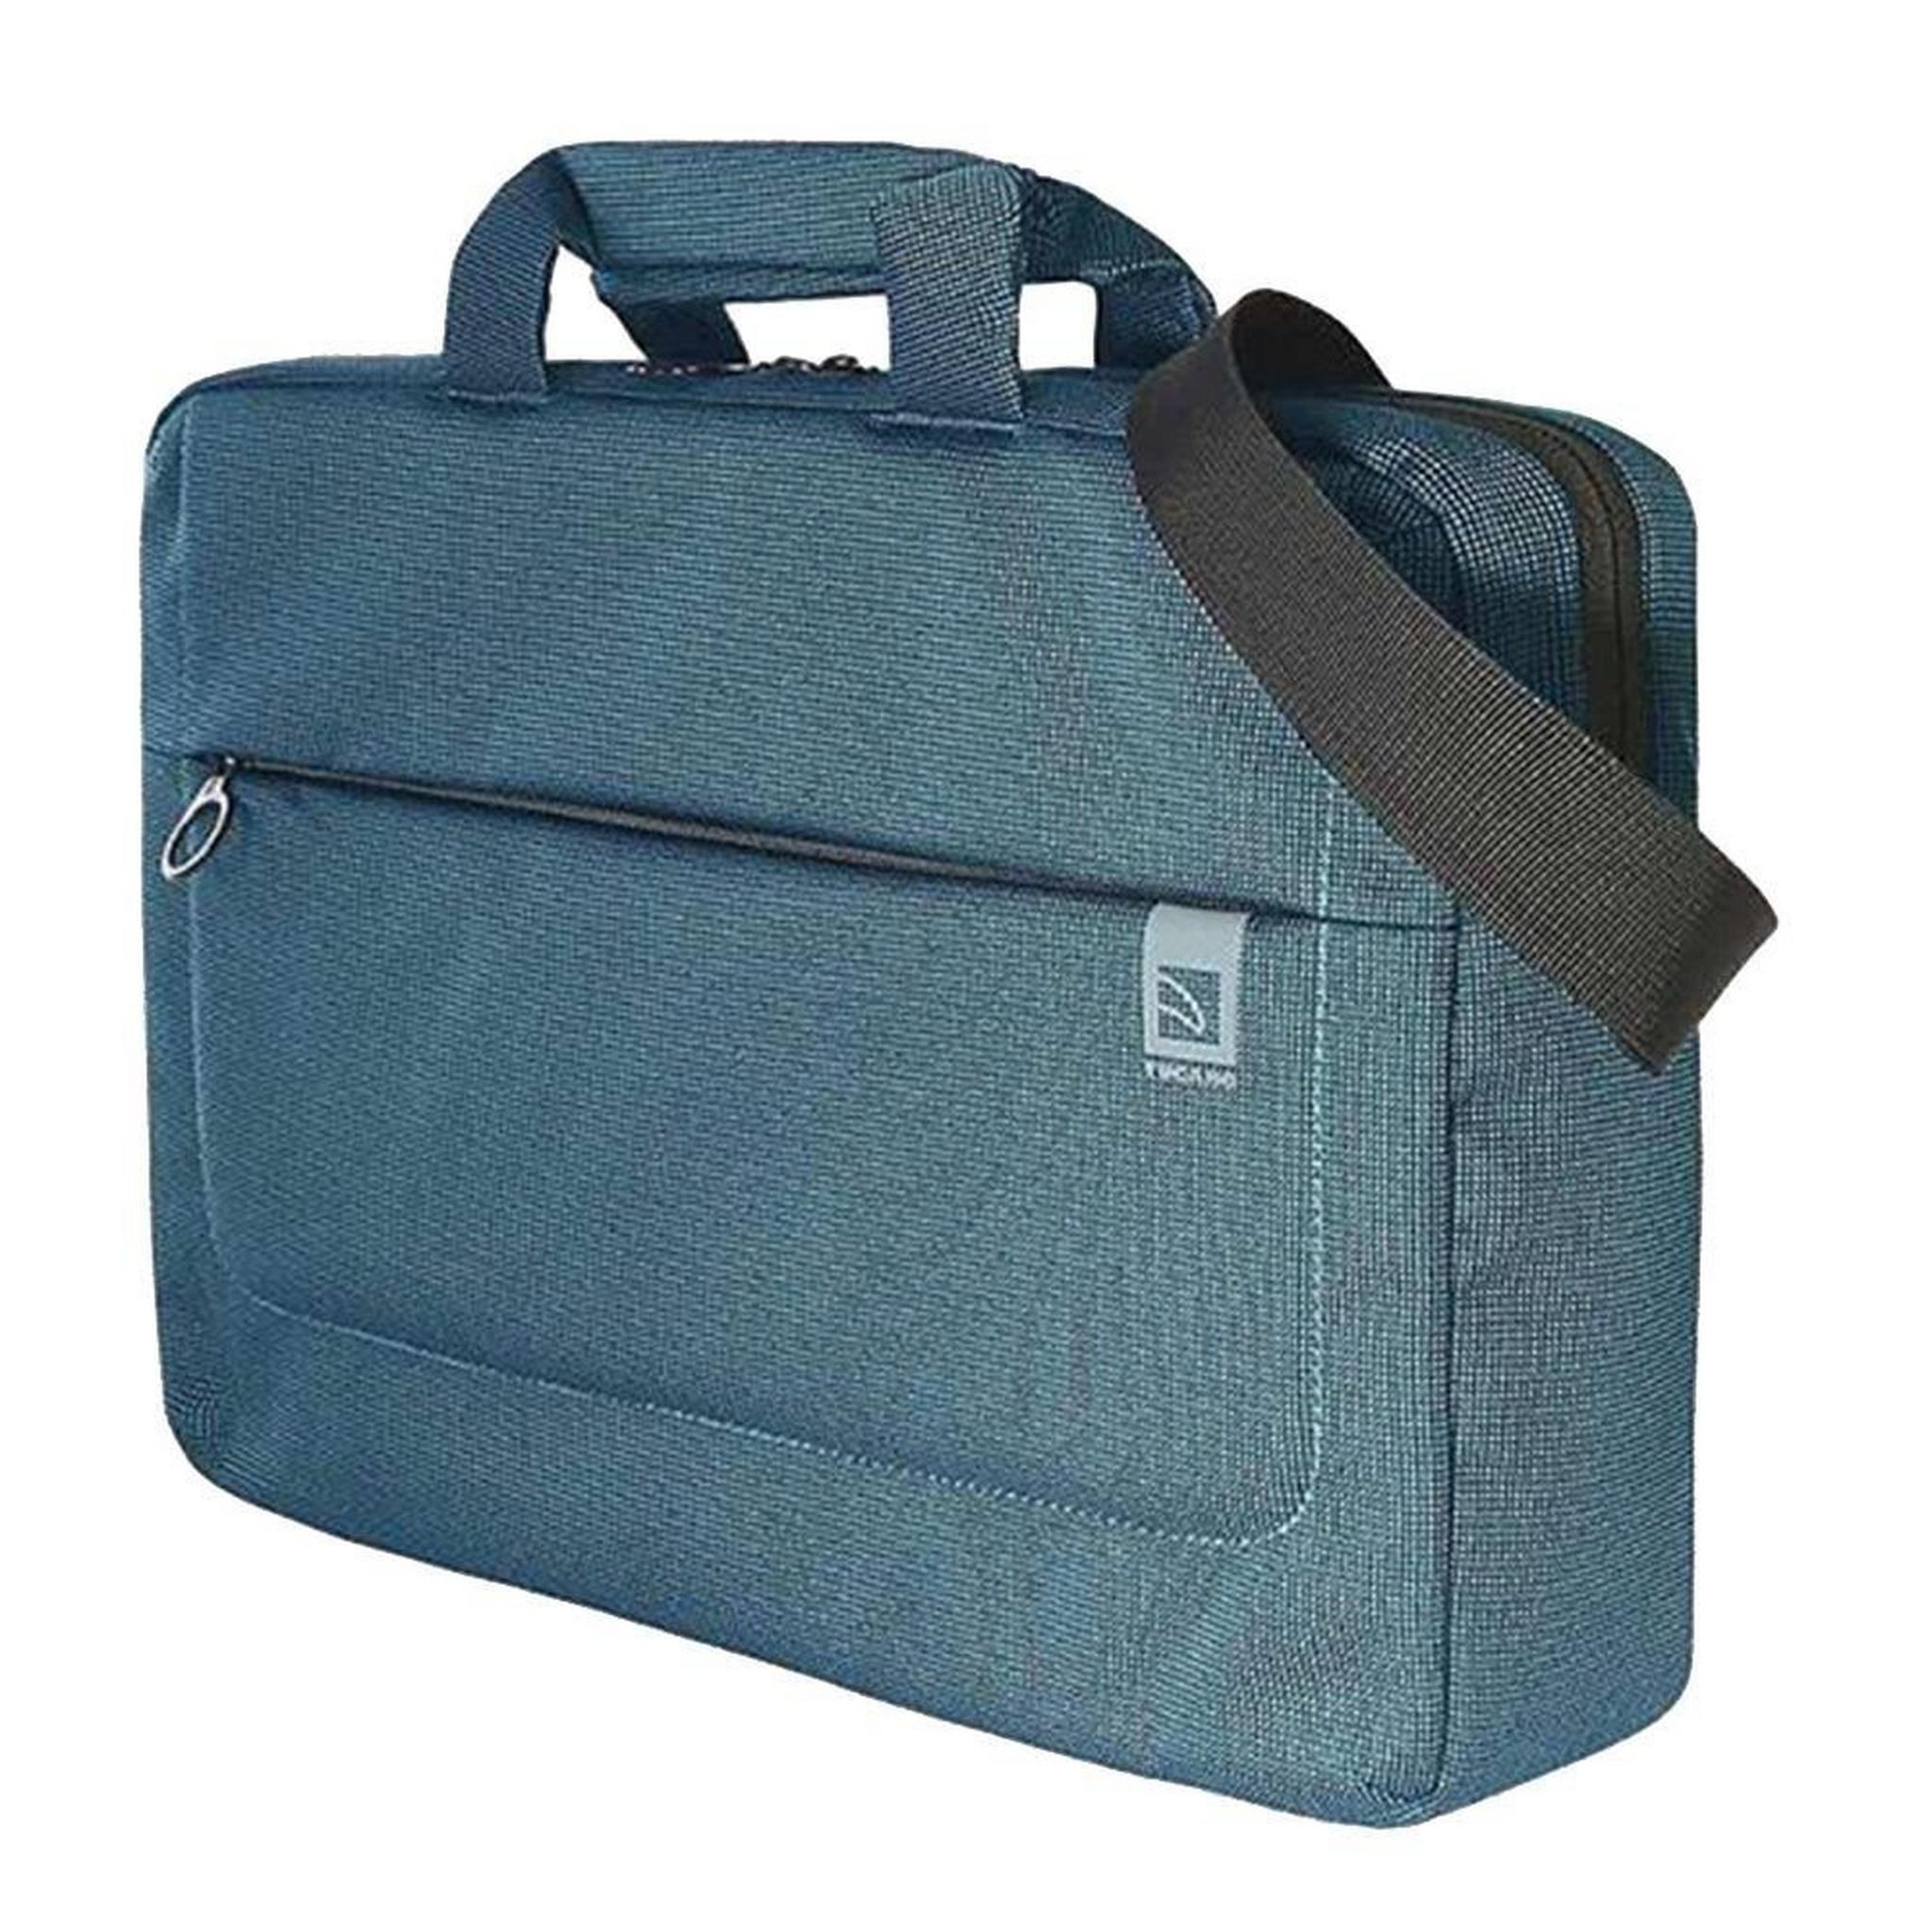 Tucano Loop Bag For 13-14 Inch Laptop, BSLOOP13-Z– Light Blue